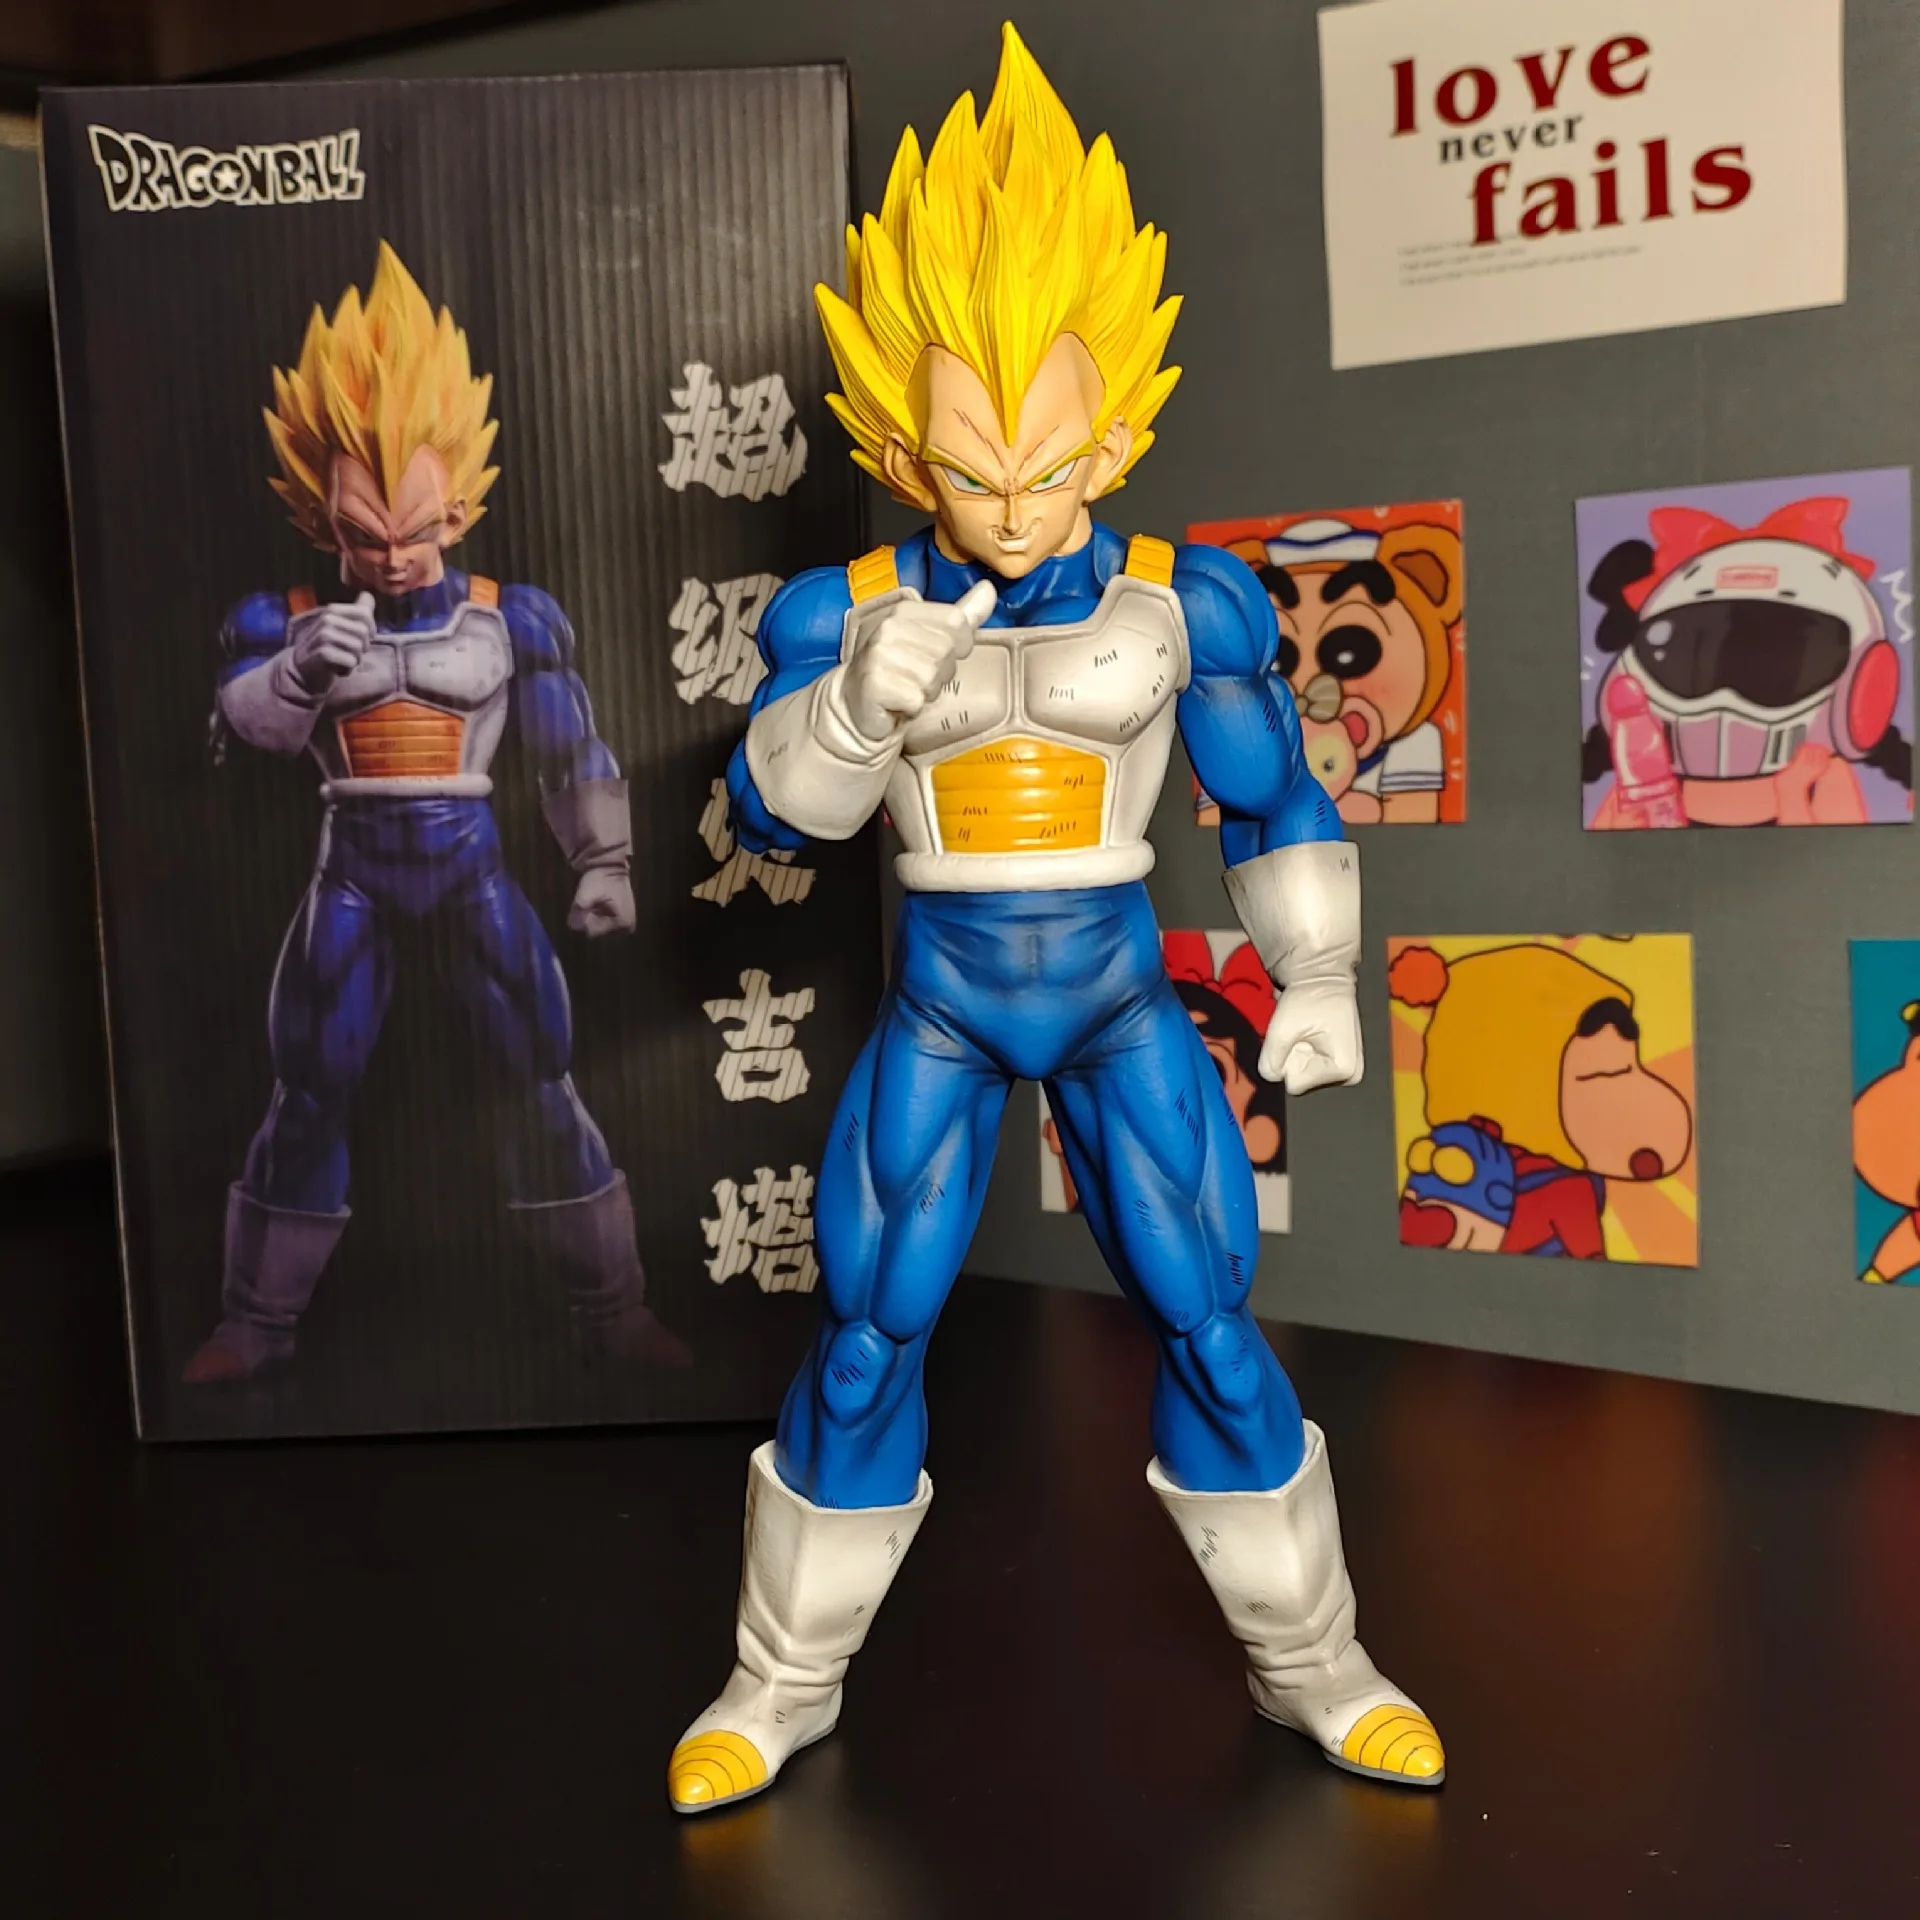 New 25cm Anime Dragon Ball Z Super Trunks Action Figure Pvc Super Saiyan Gotenk Figures Collection Model Toy For Kids Gift